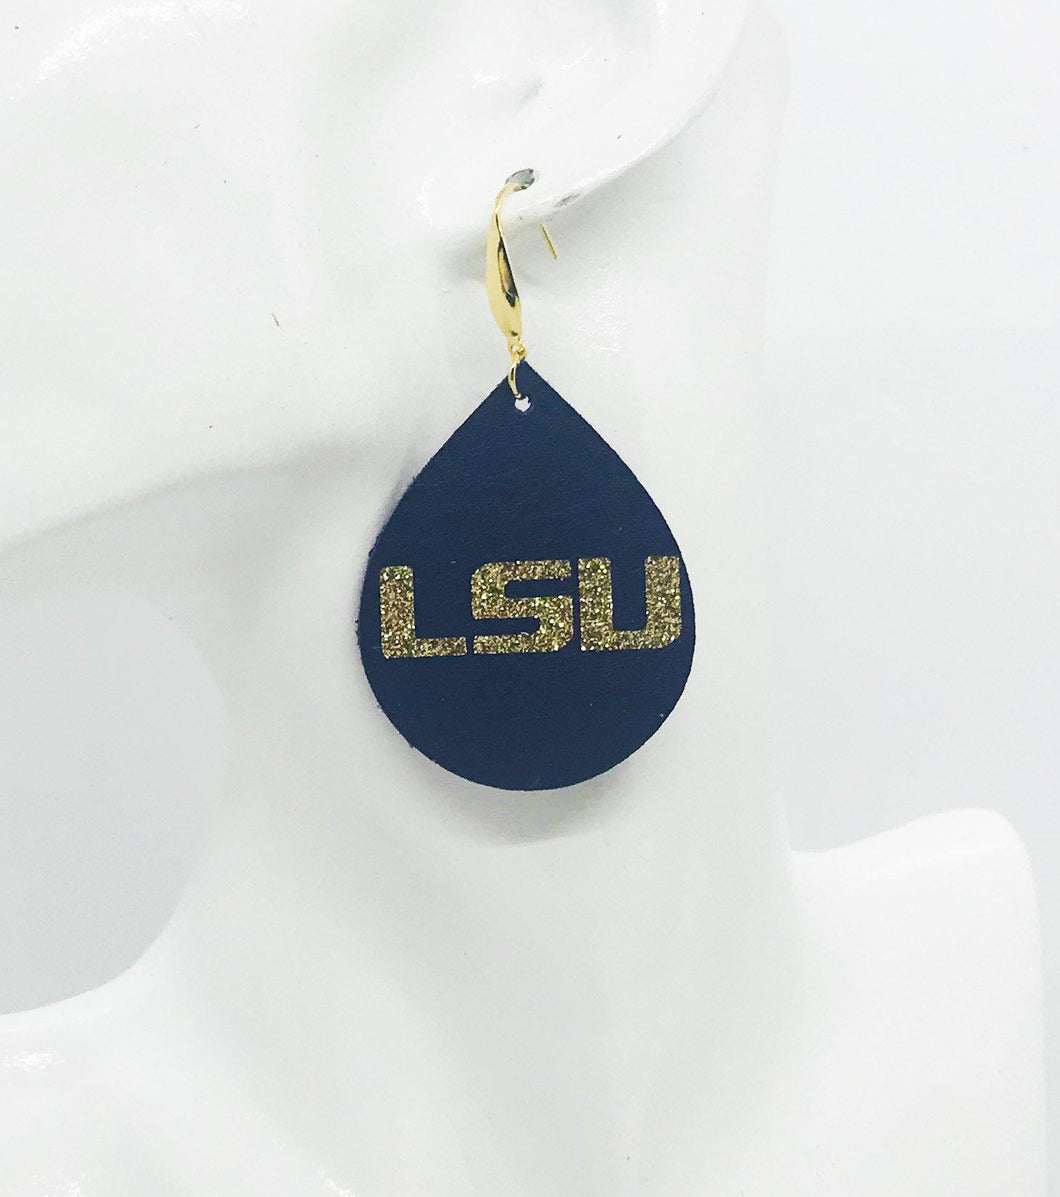 LSU Themed Leather Earrings - E19-1027